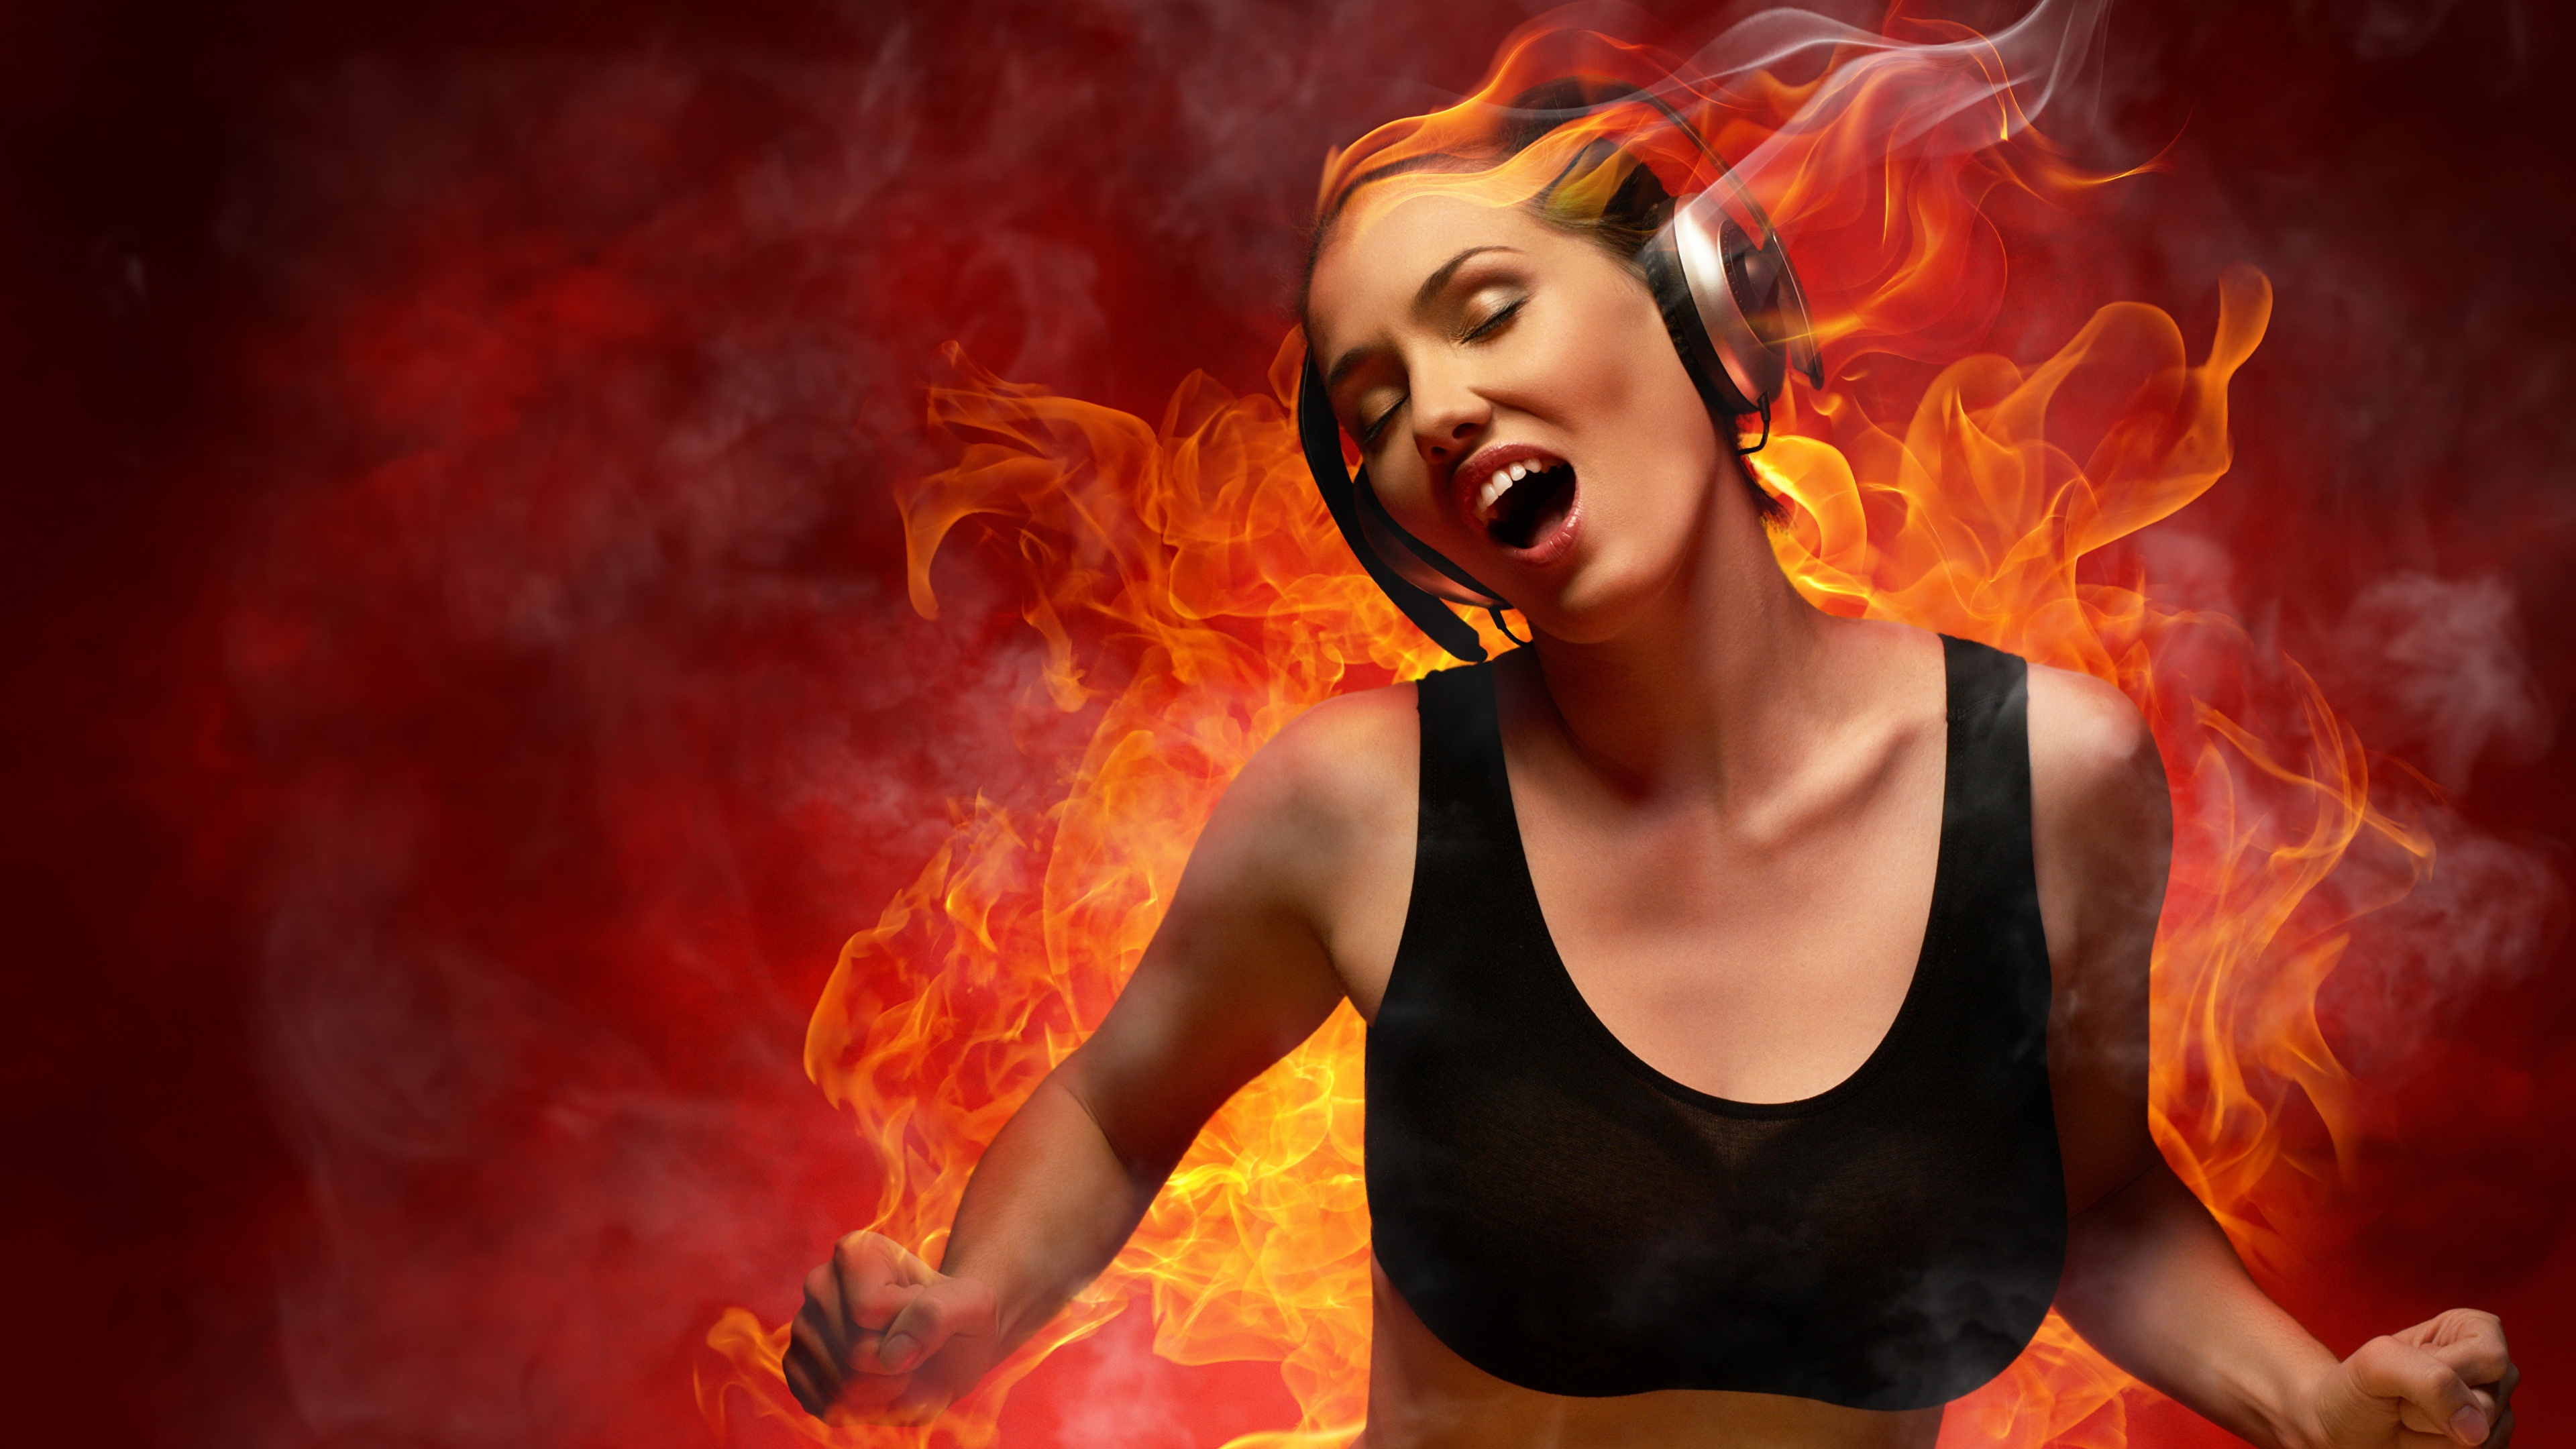 Flame, Muscle, Fire, Flesh, DJ Mixer. Wallpaper in 3840x2160 Resolution